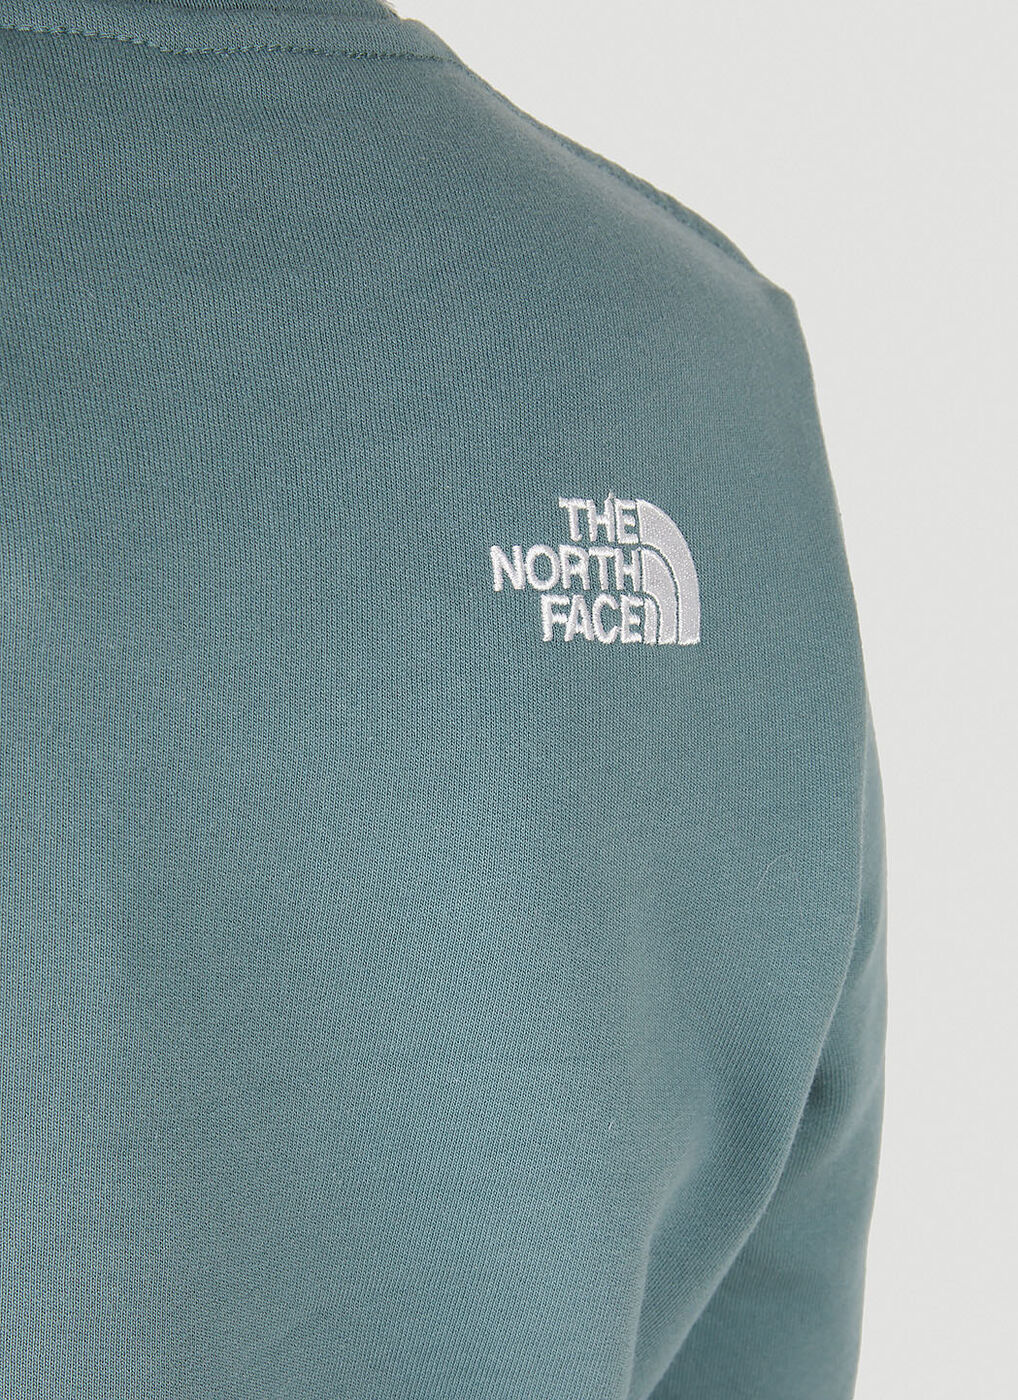 Zumu Crewneck Sweatshirt in Blue The North Face